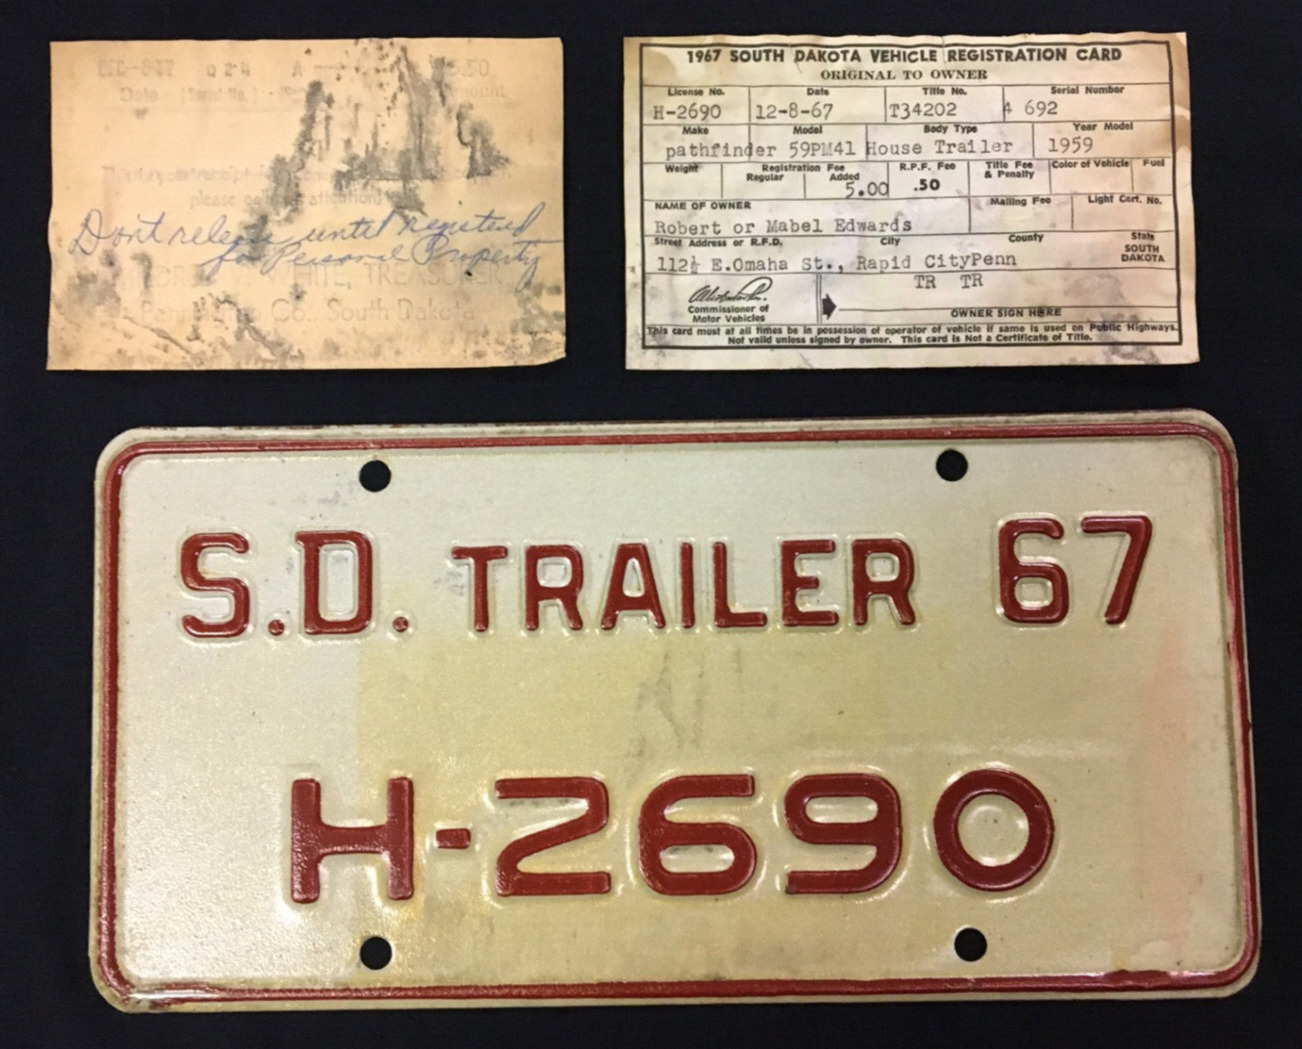 South Dakota 1967 Trailer License Plate H-2690 W/ Registration